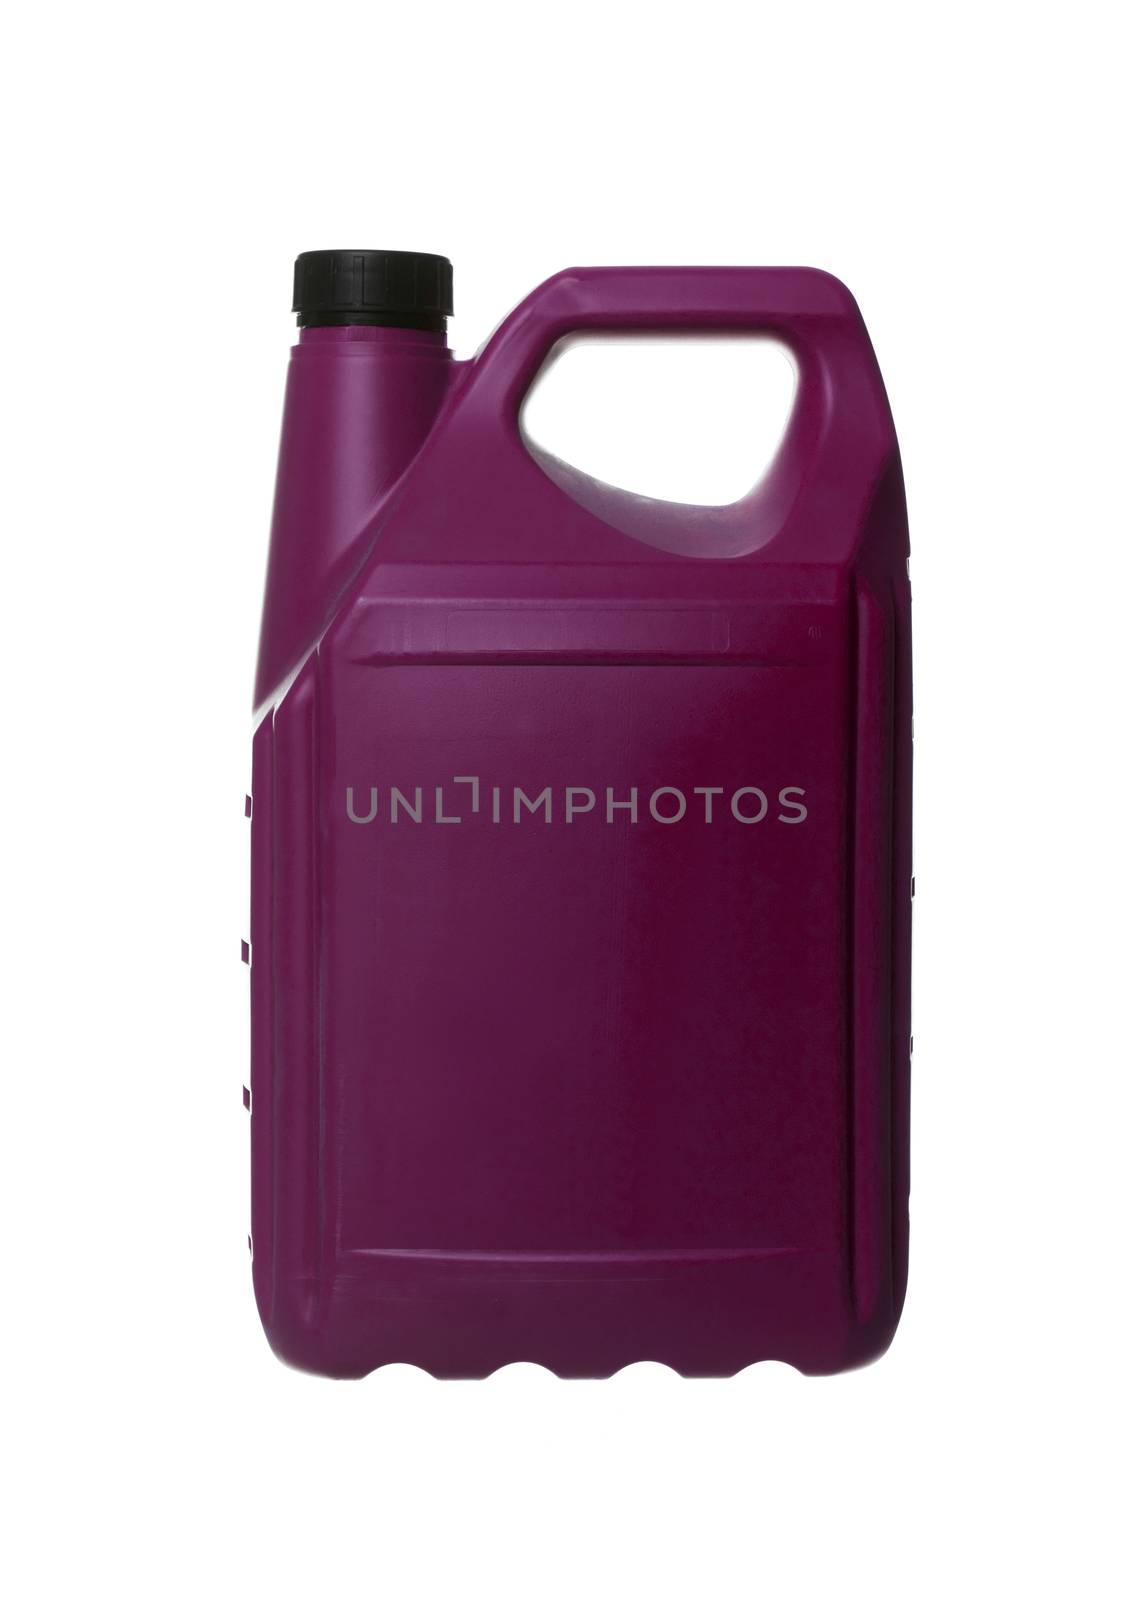 Purple plastic can by gemenacom